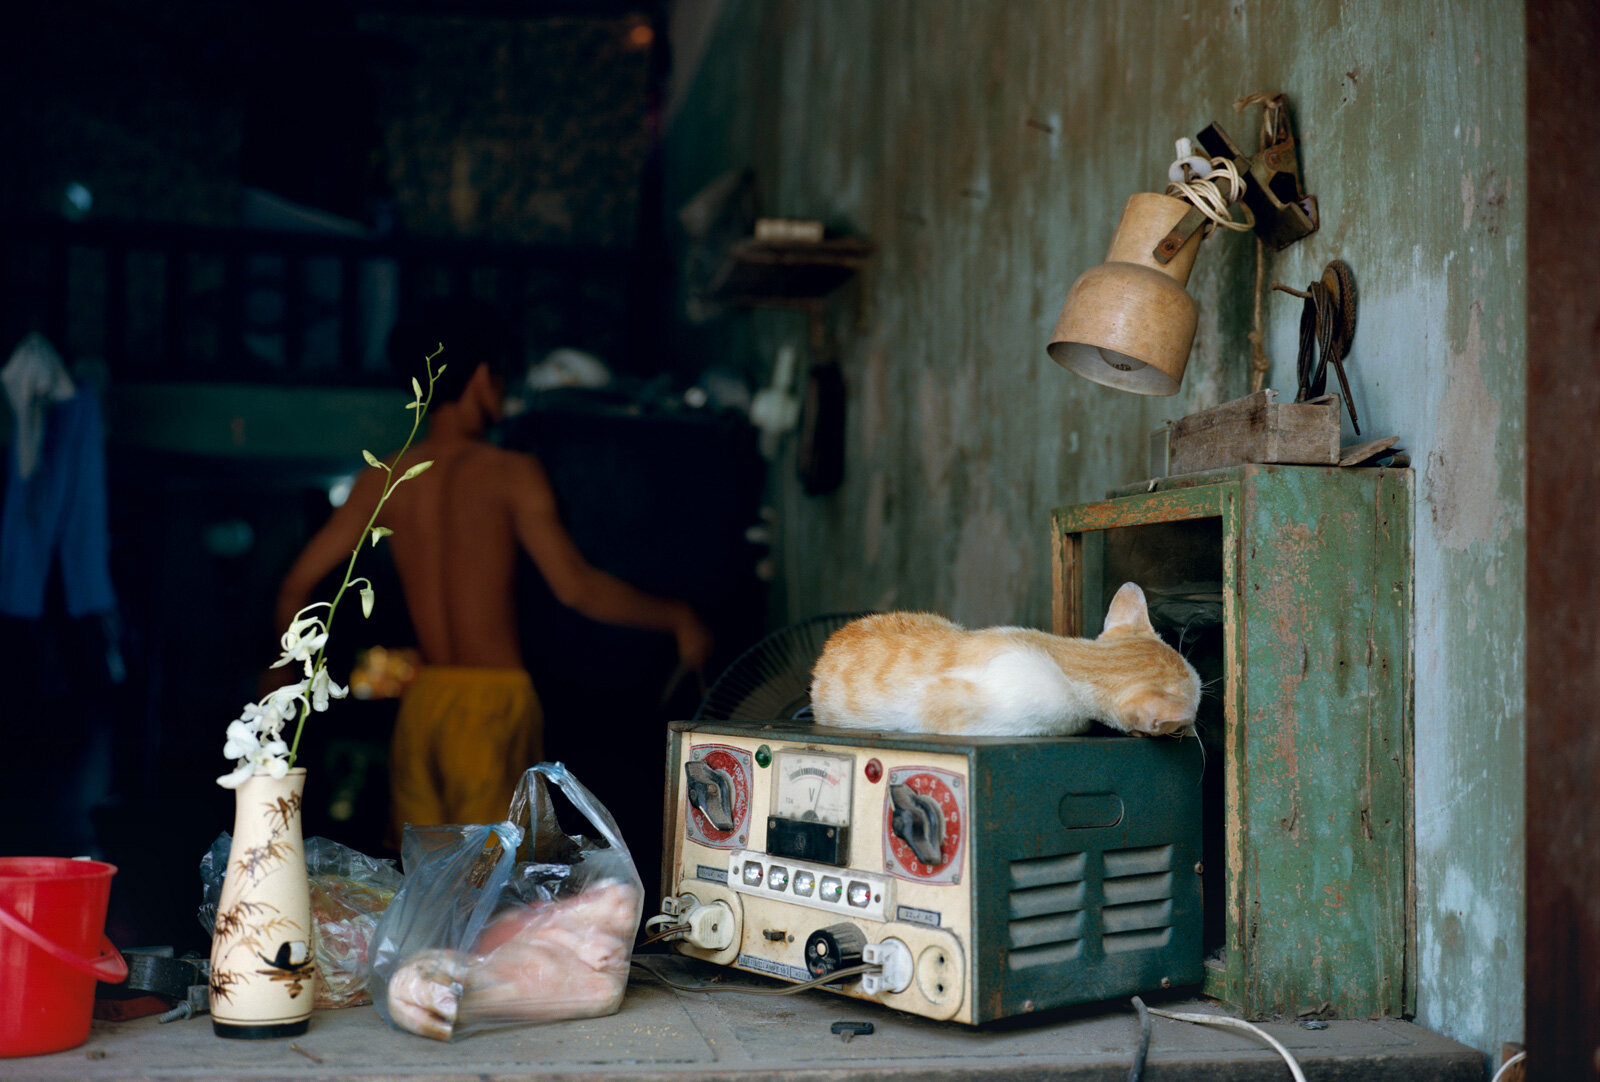  Voltage Regulator and Pig’s Foot, Hanoi, Vietnam 1995 